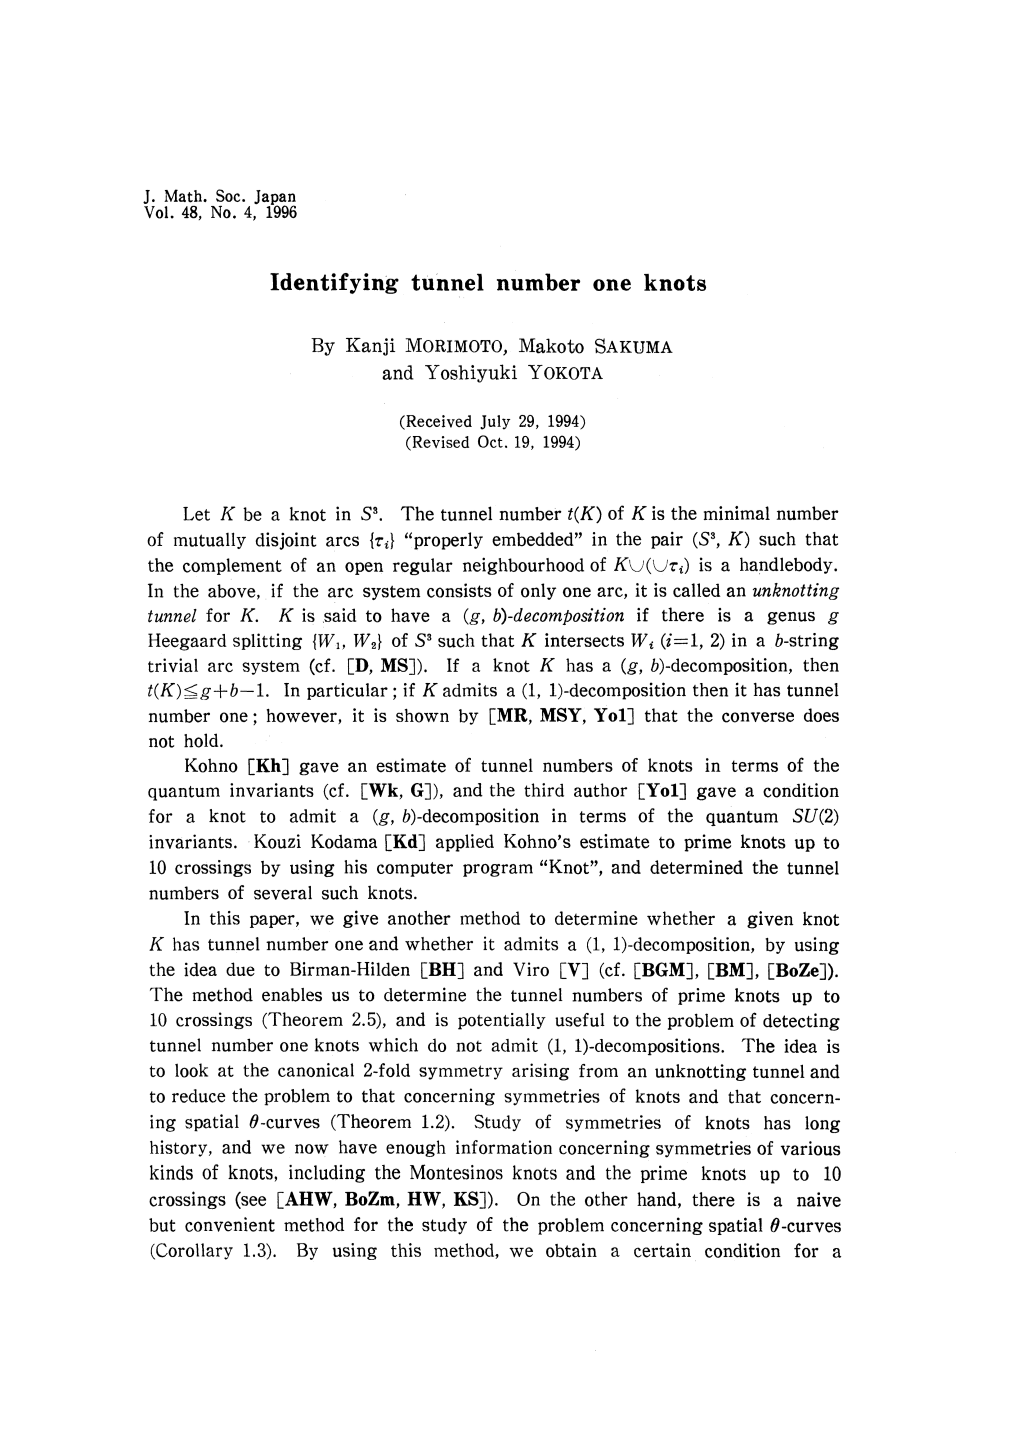 J. Math. Soc. Japan Vol. 48, No. 4, 1996 Identifying Tunnel Number One